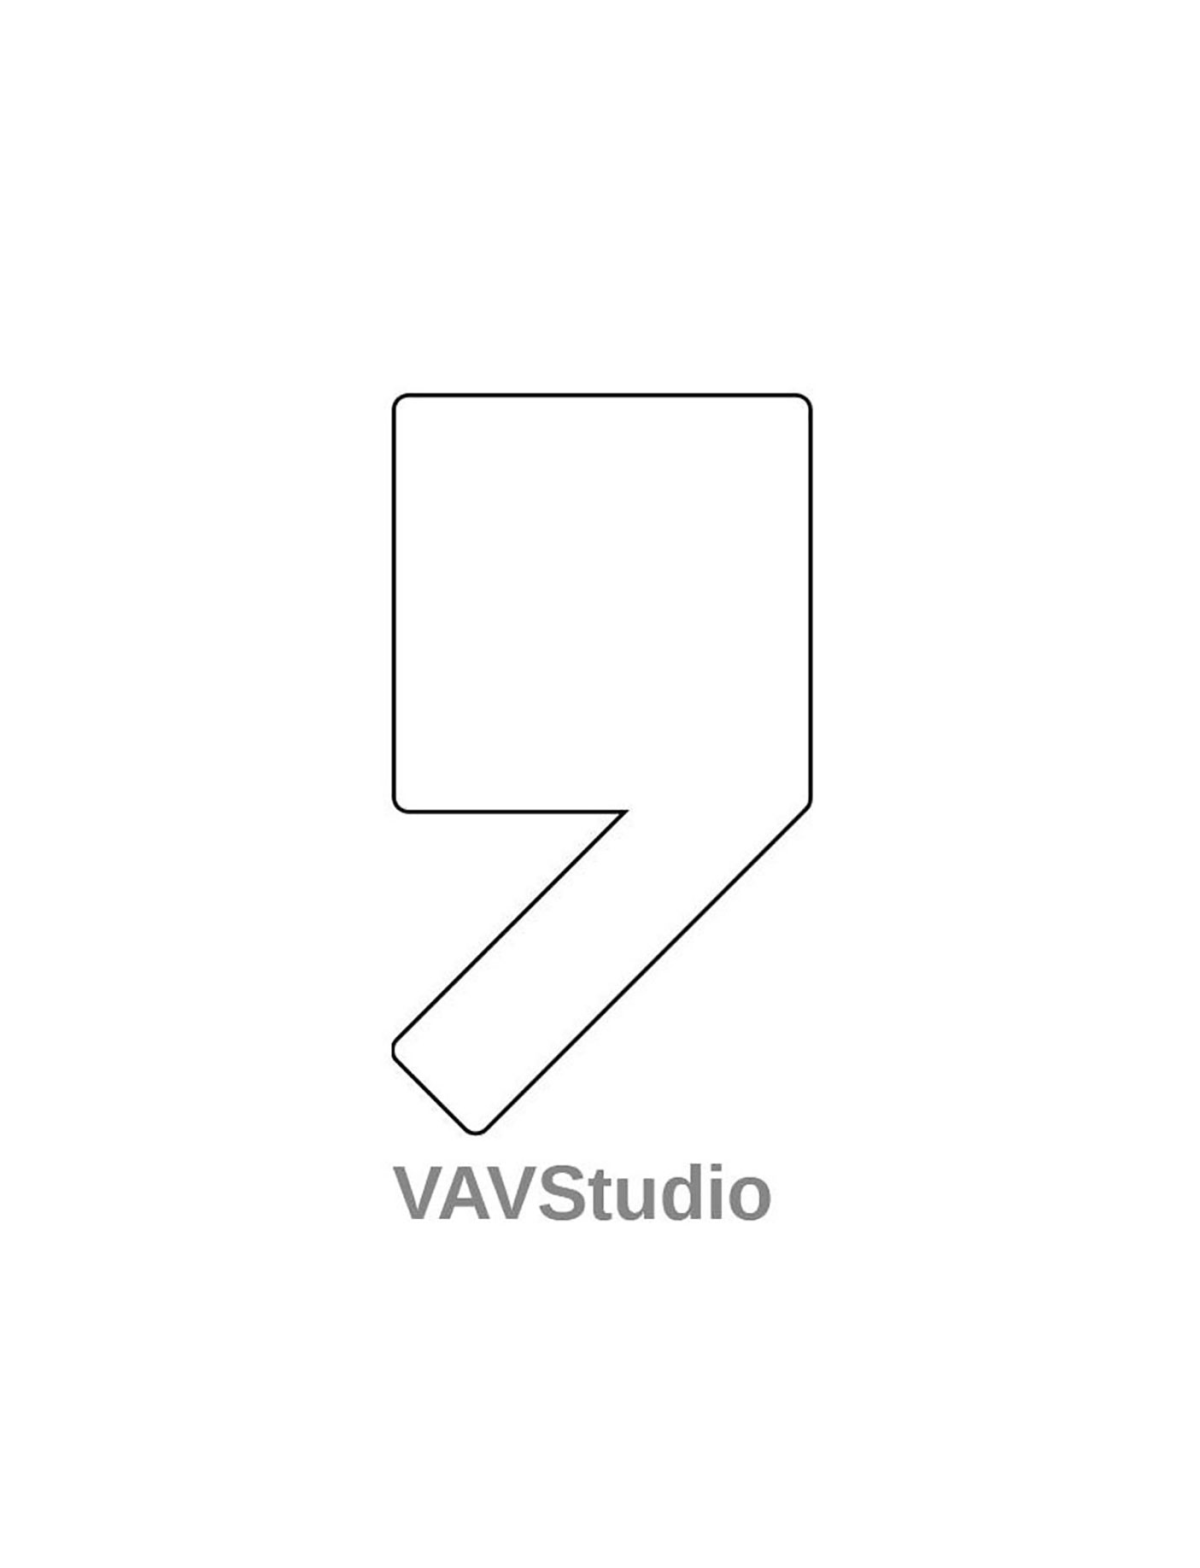 VAV Studio